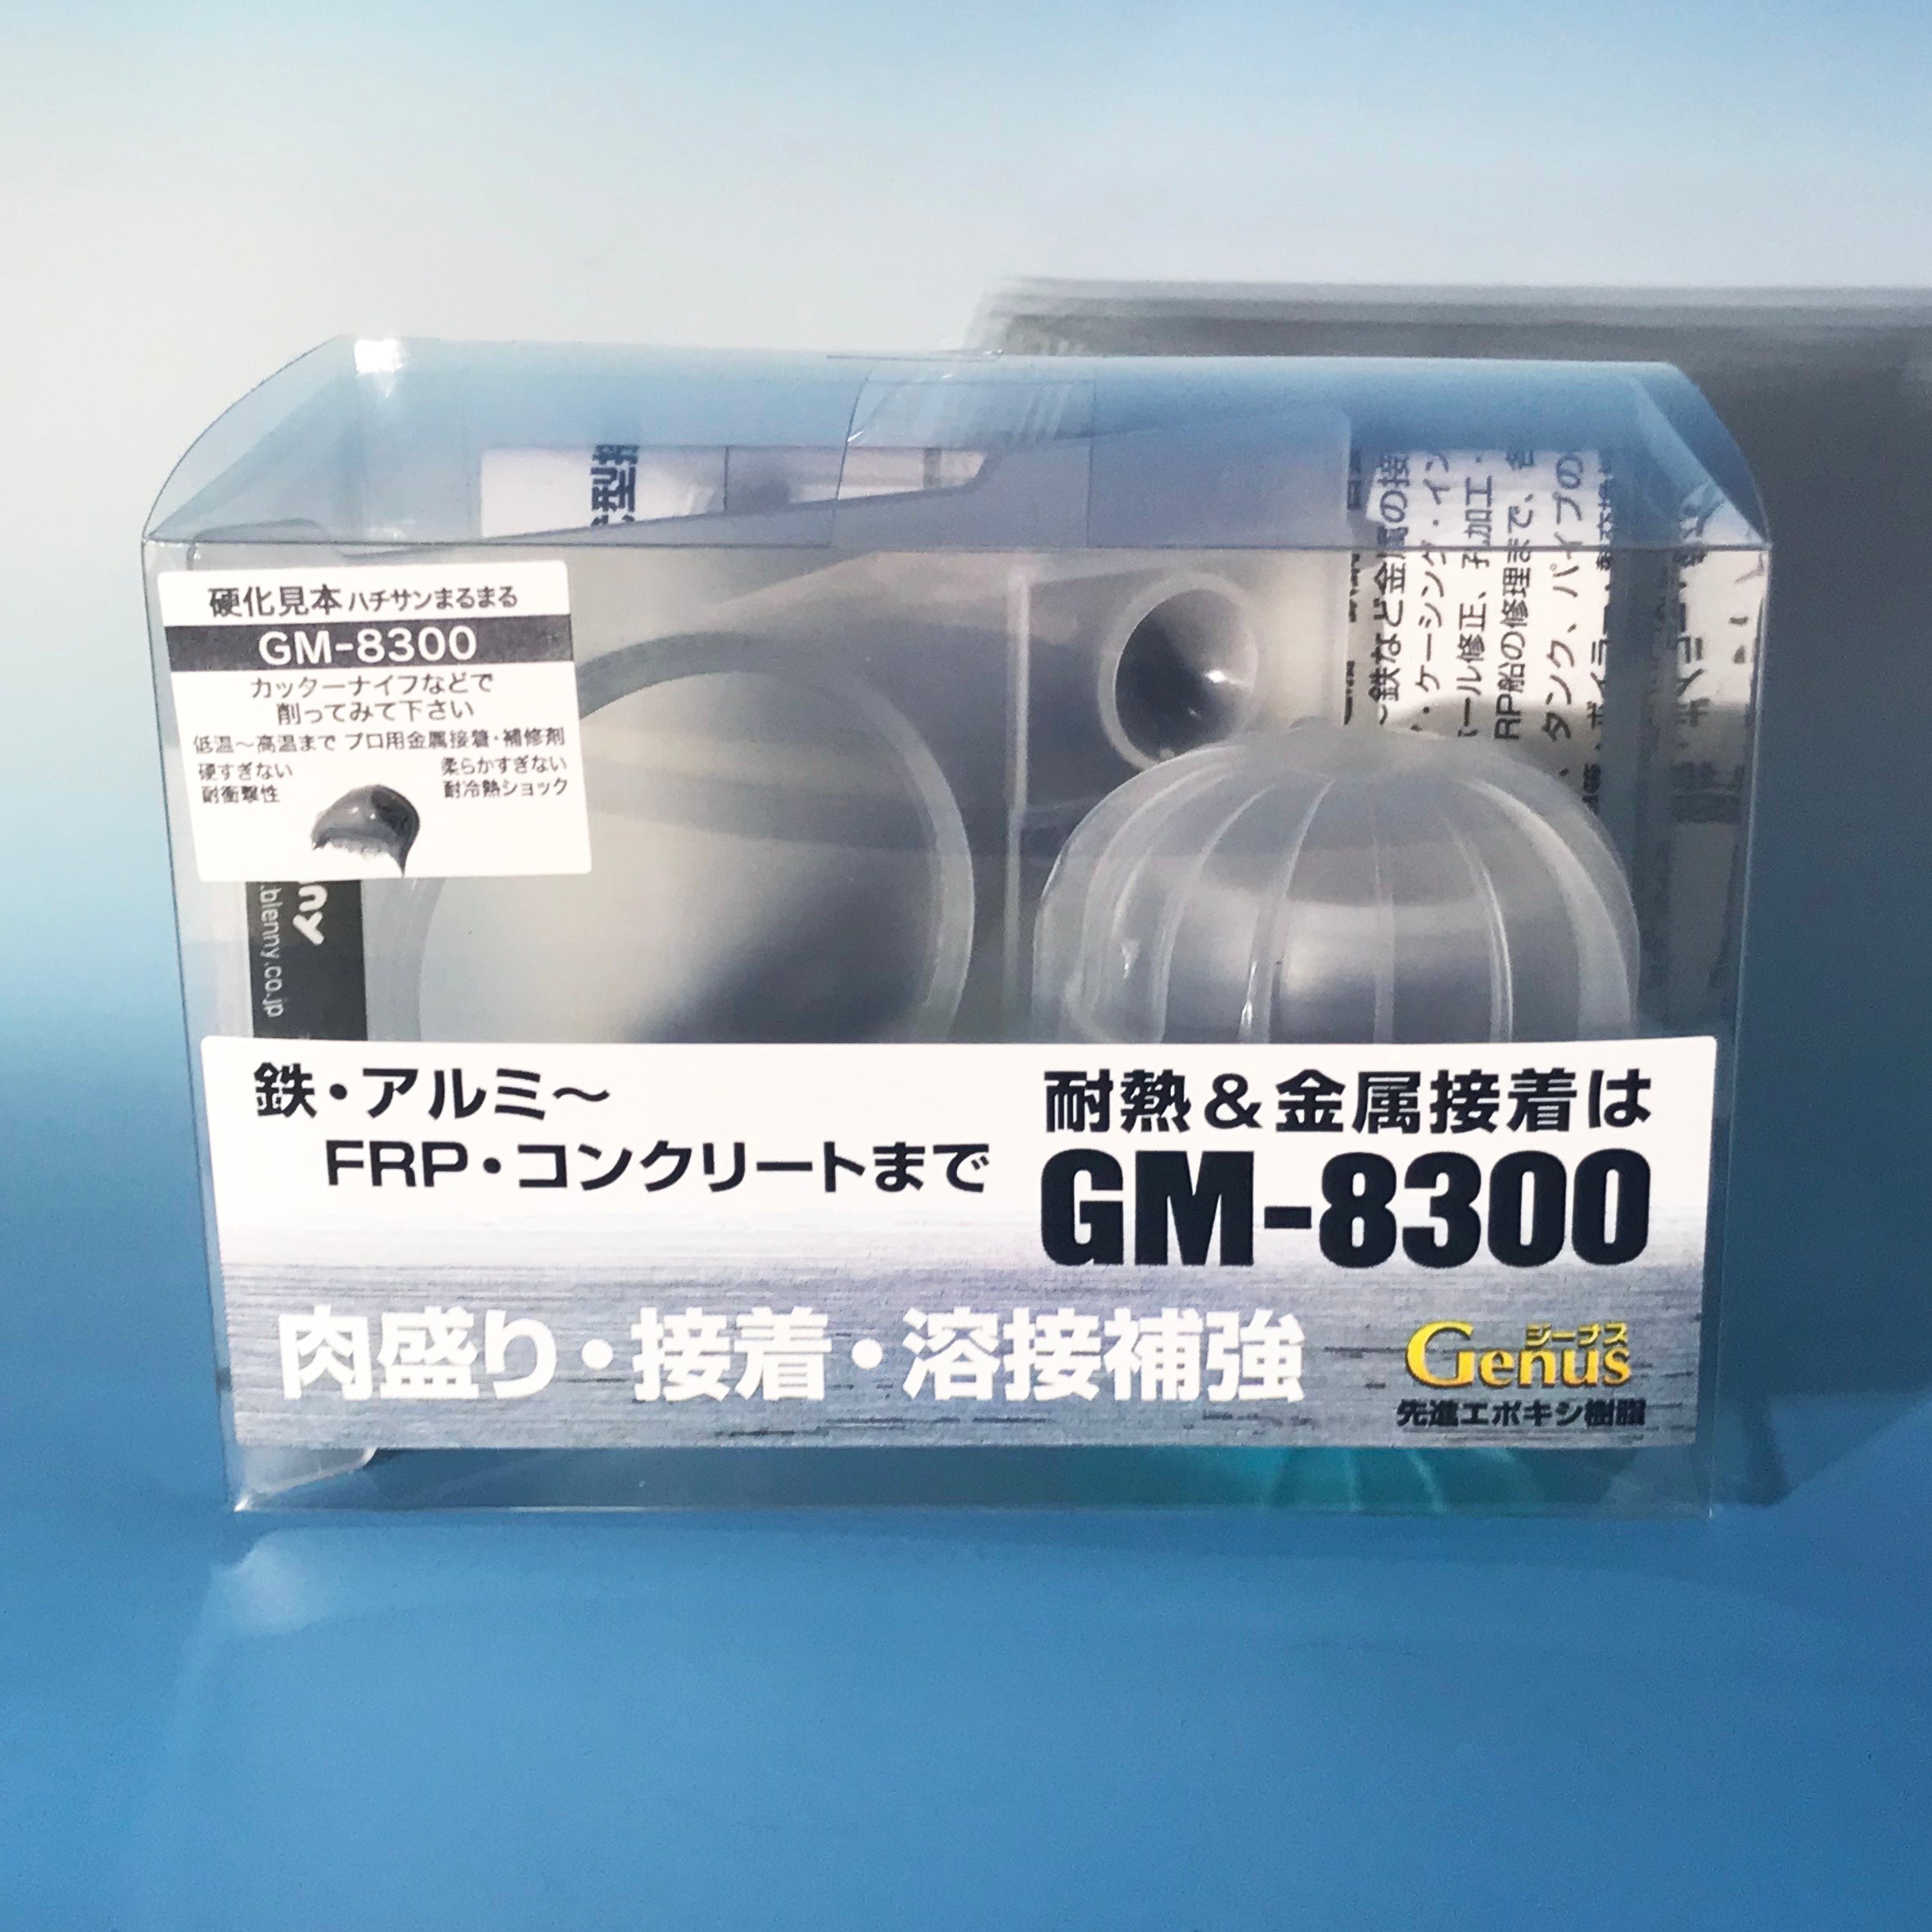 GM-8300-44 耐熱肉盛り補修剤 [エポキシパテ] - ホビー工具・材料